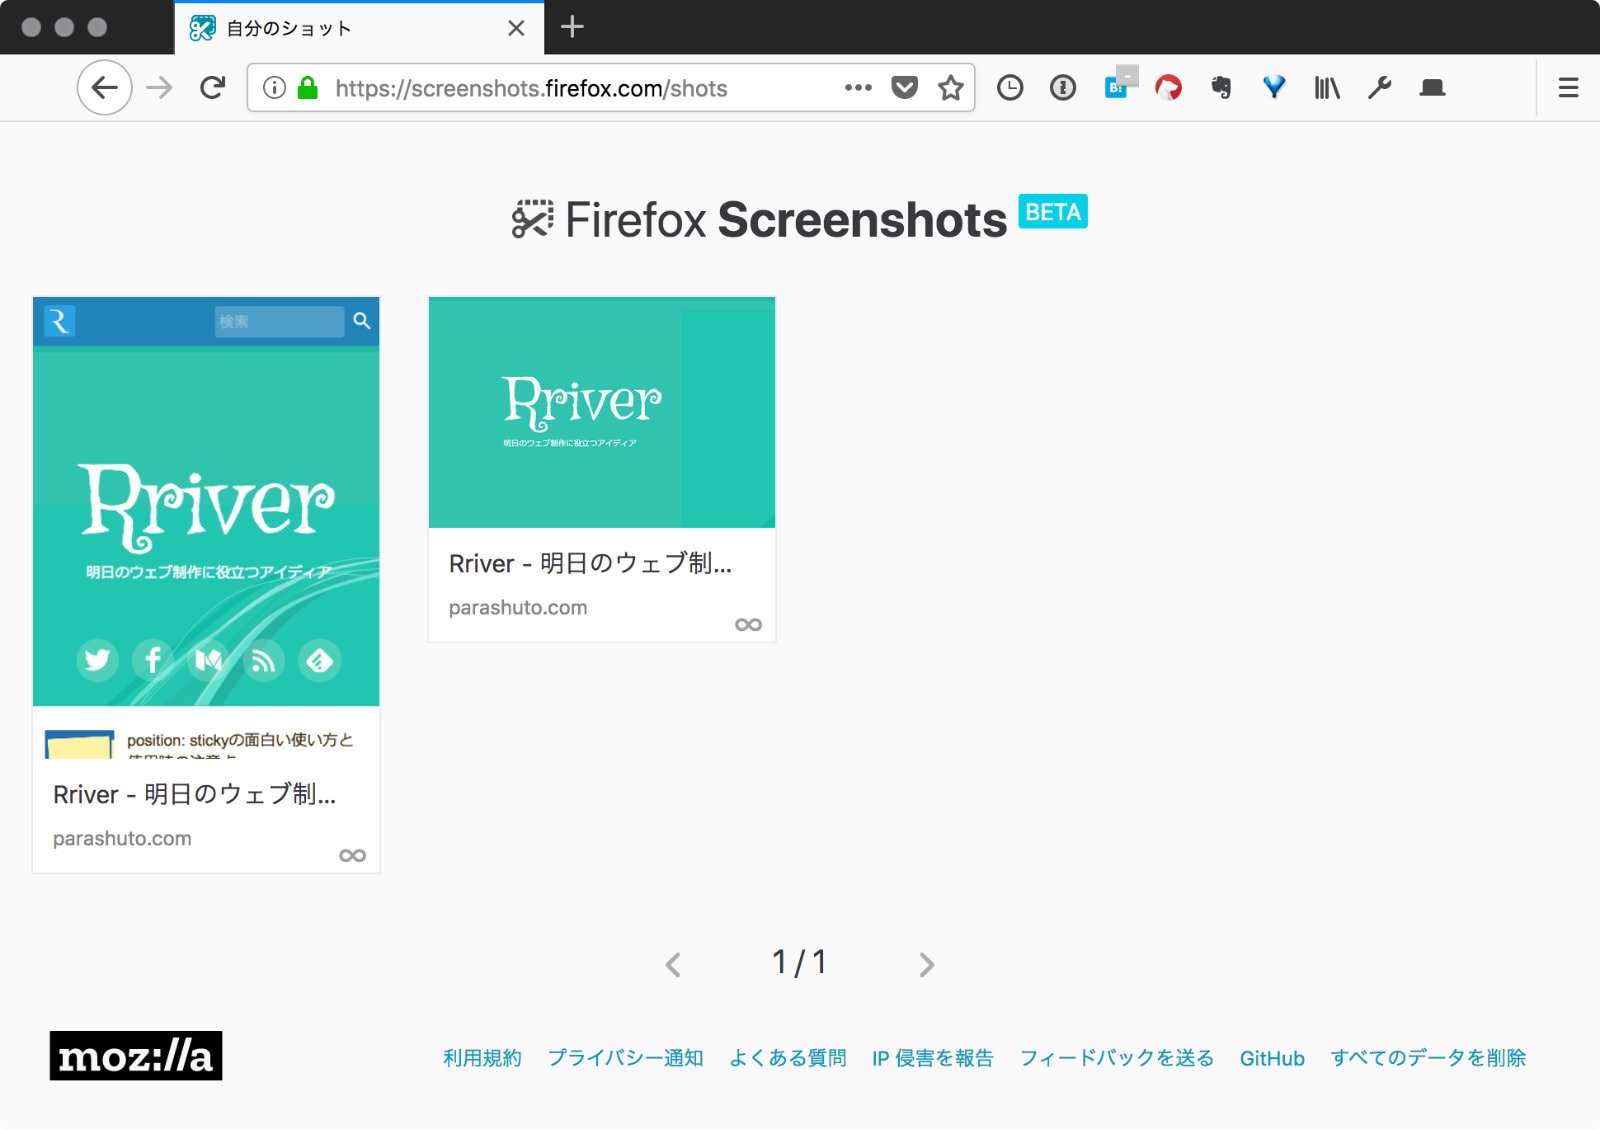 Firefox Screenshotsの「自分のショット」画面